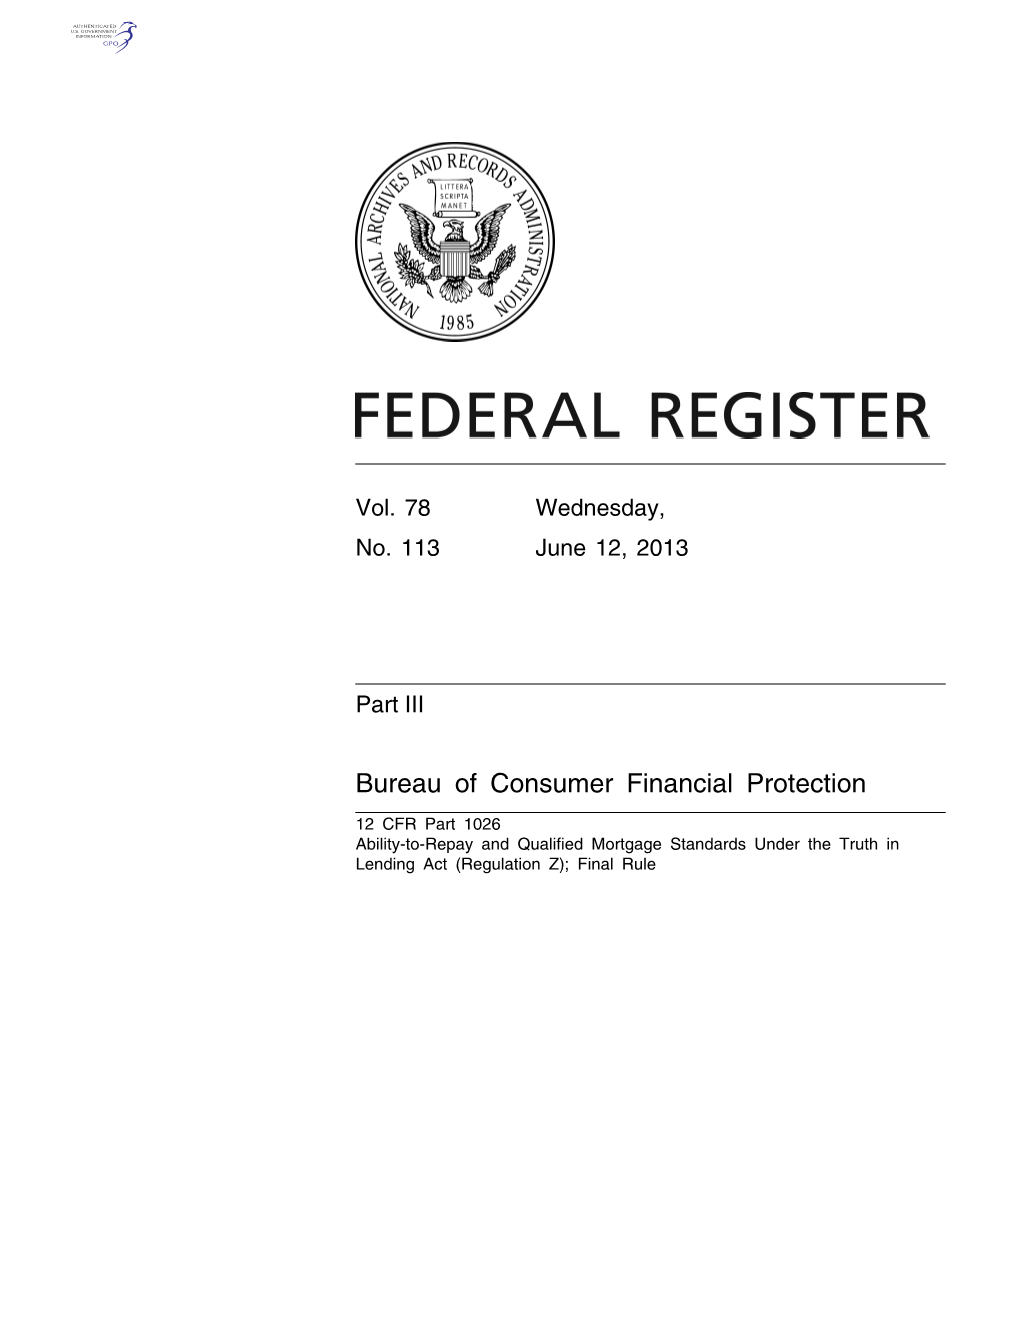 Bureau of Consumer Financial Protection